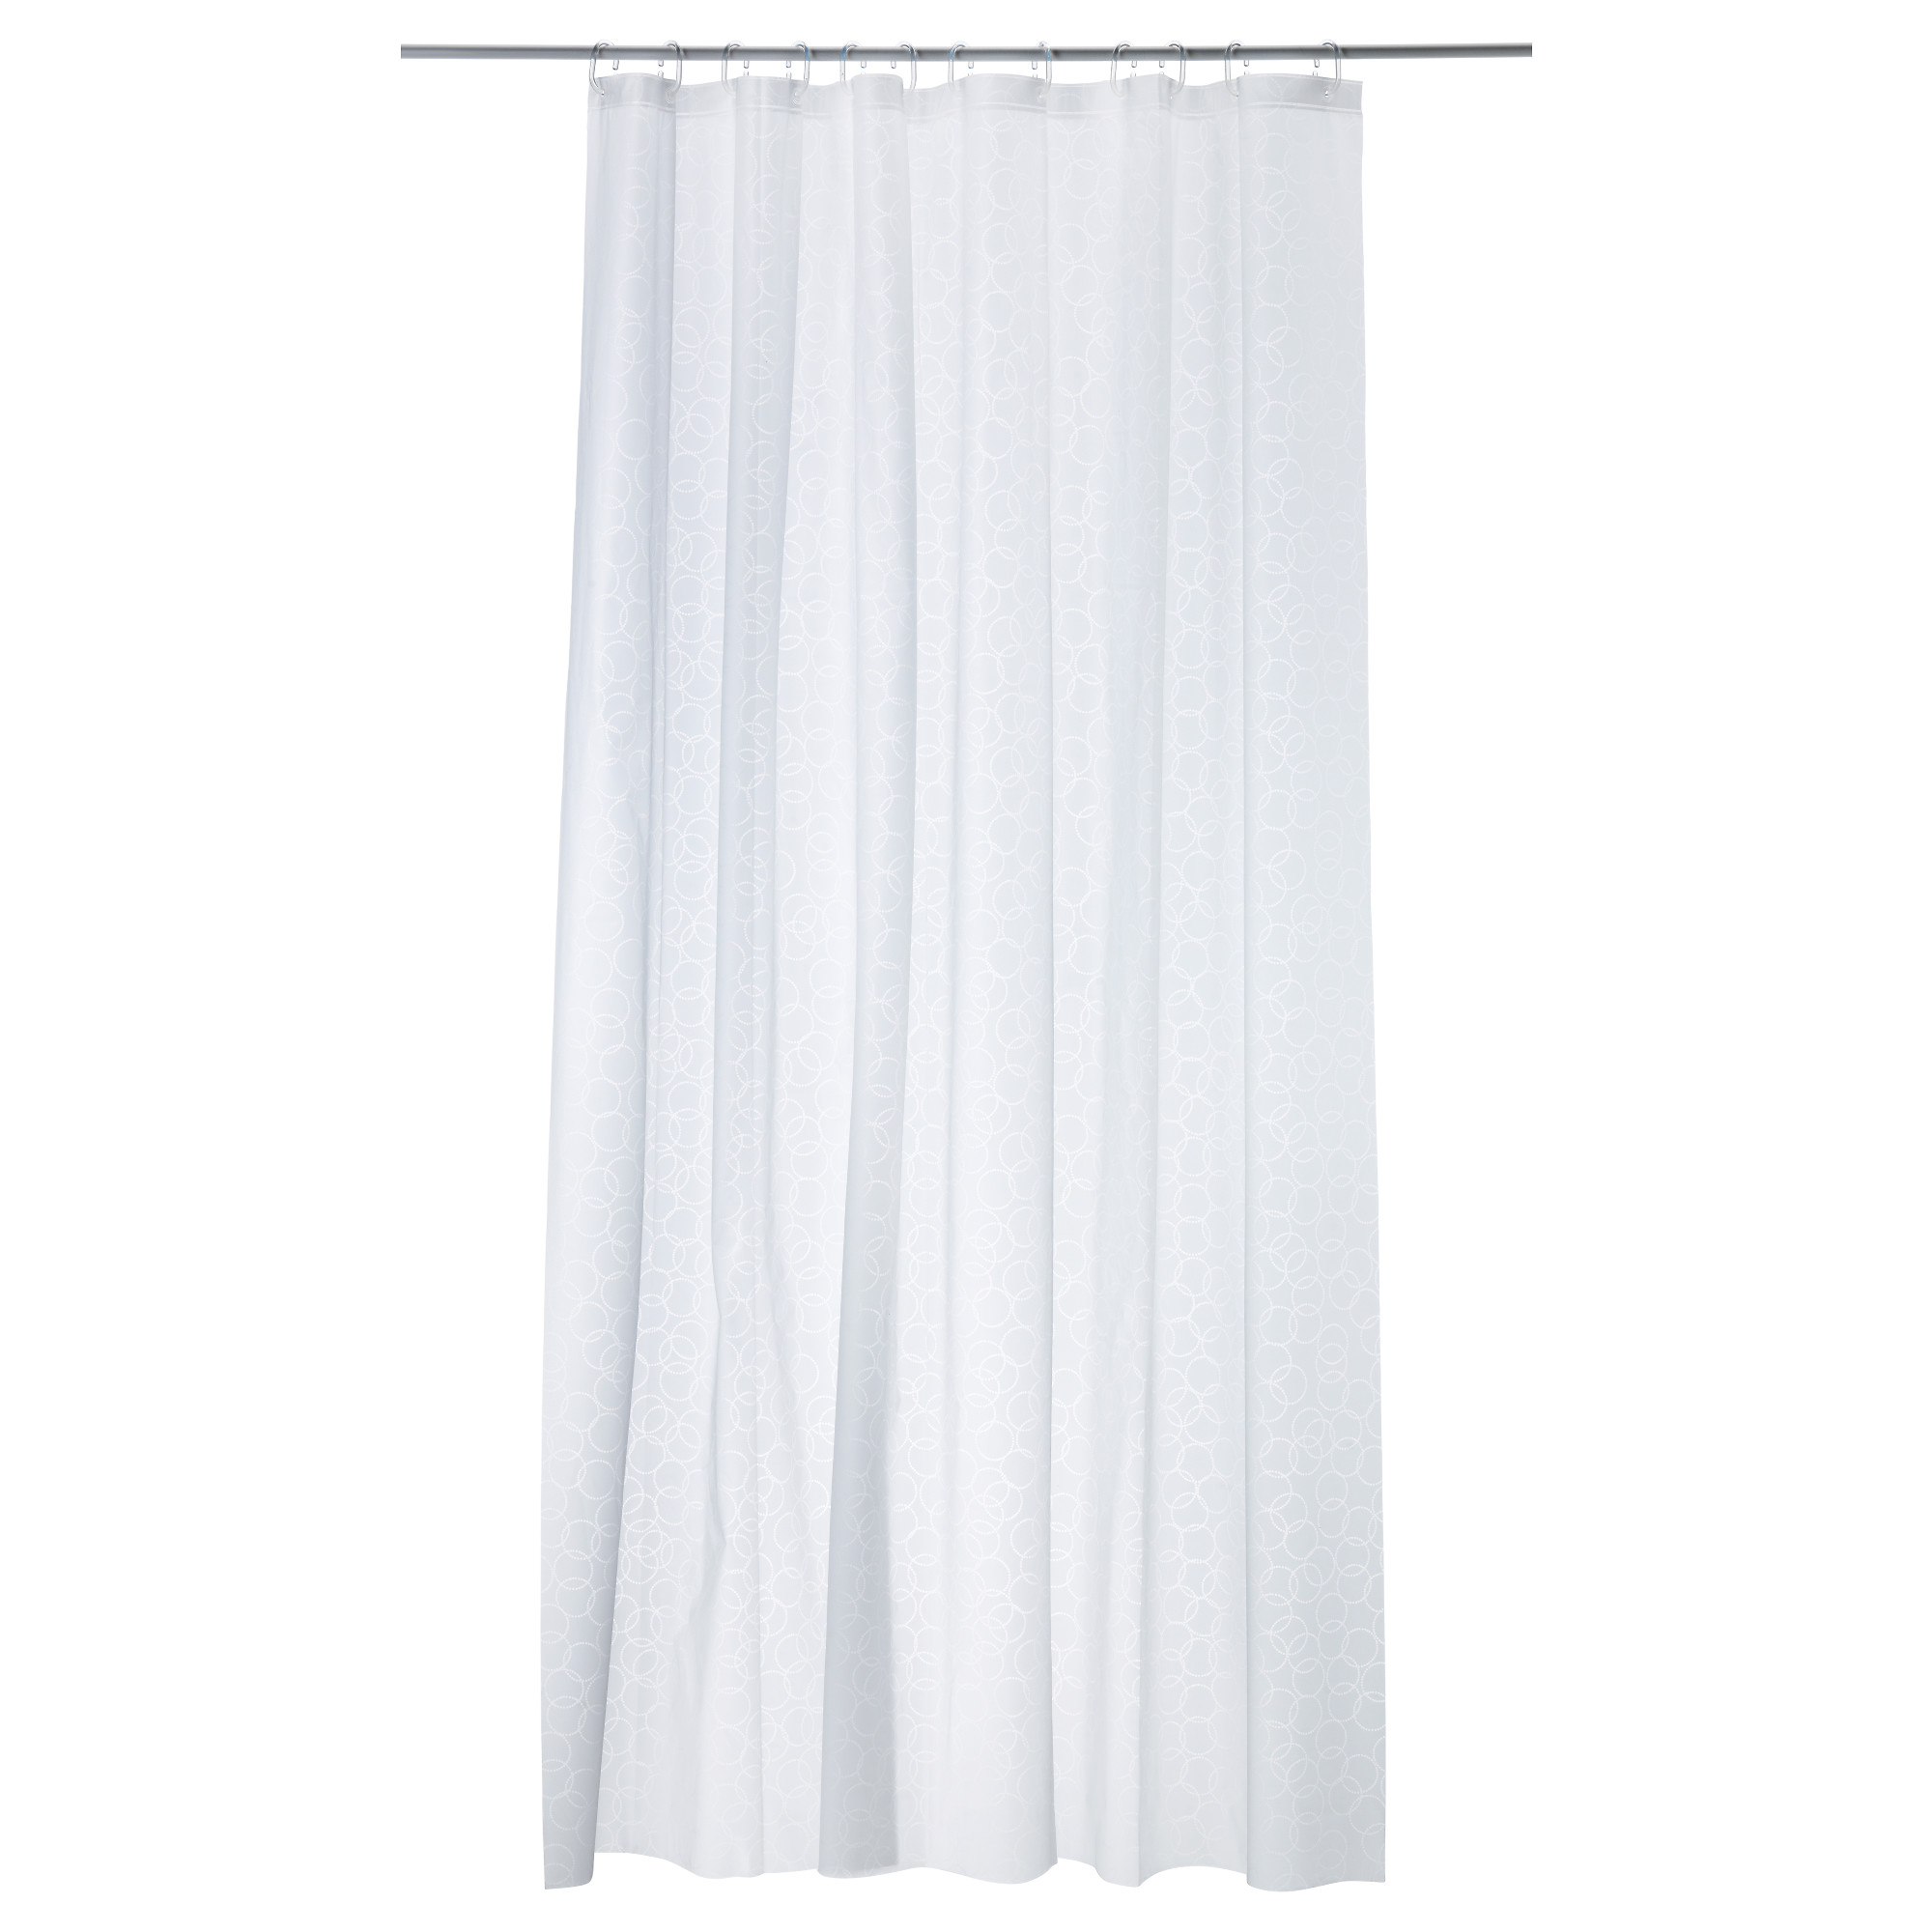 classy design shower curtains ikea inconjunction with innaren shower curtain UHOGSRF